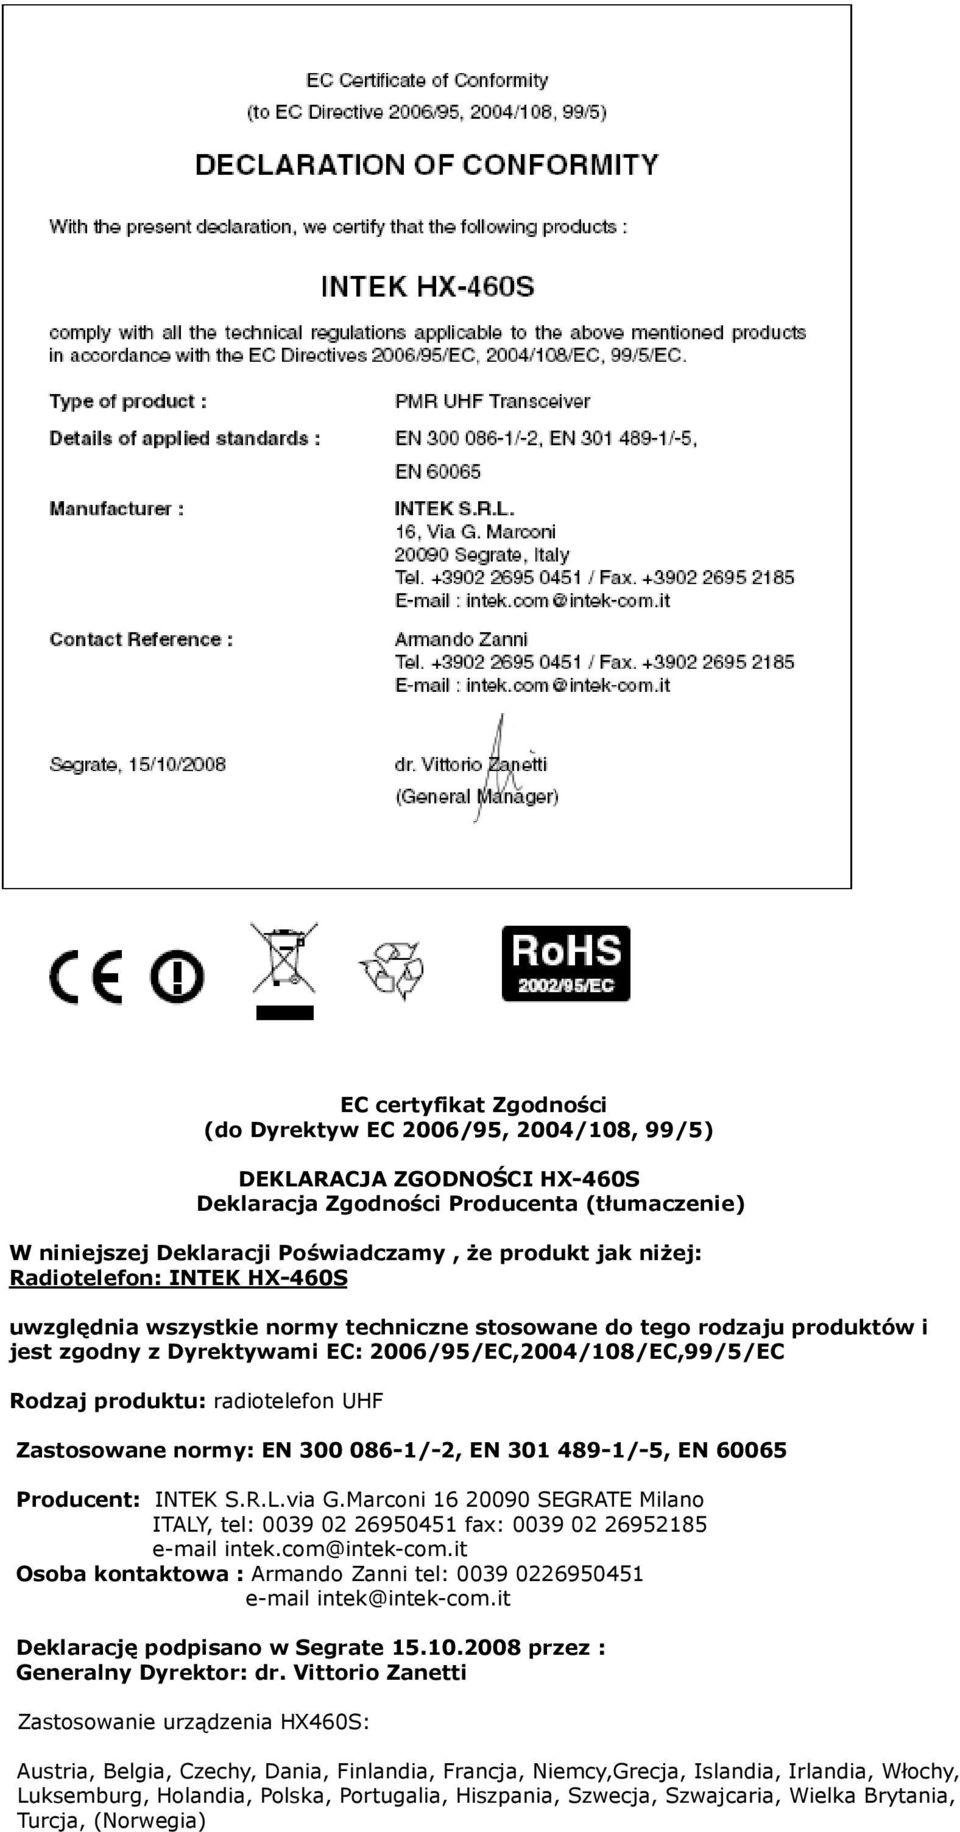 Zastosowane normy: EN 300 086-1/-2, EN 301 489-1/-5, EN 60065 Producent: INTEK S.R.L.via G.Marconi 16 20090 SEGRATE Milano ITALY, tel: 0039 02 26950451 fax: 0039 02 26952185 e-mail intek.